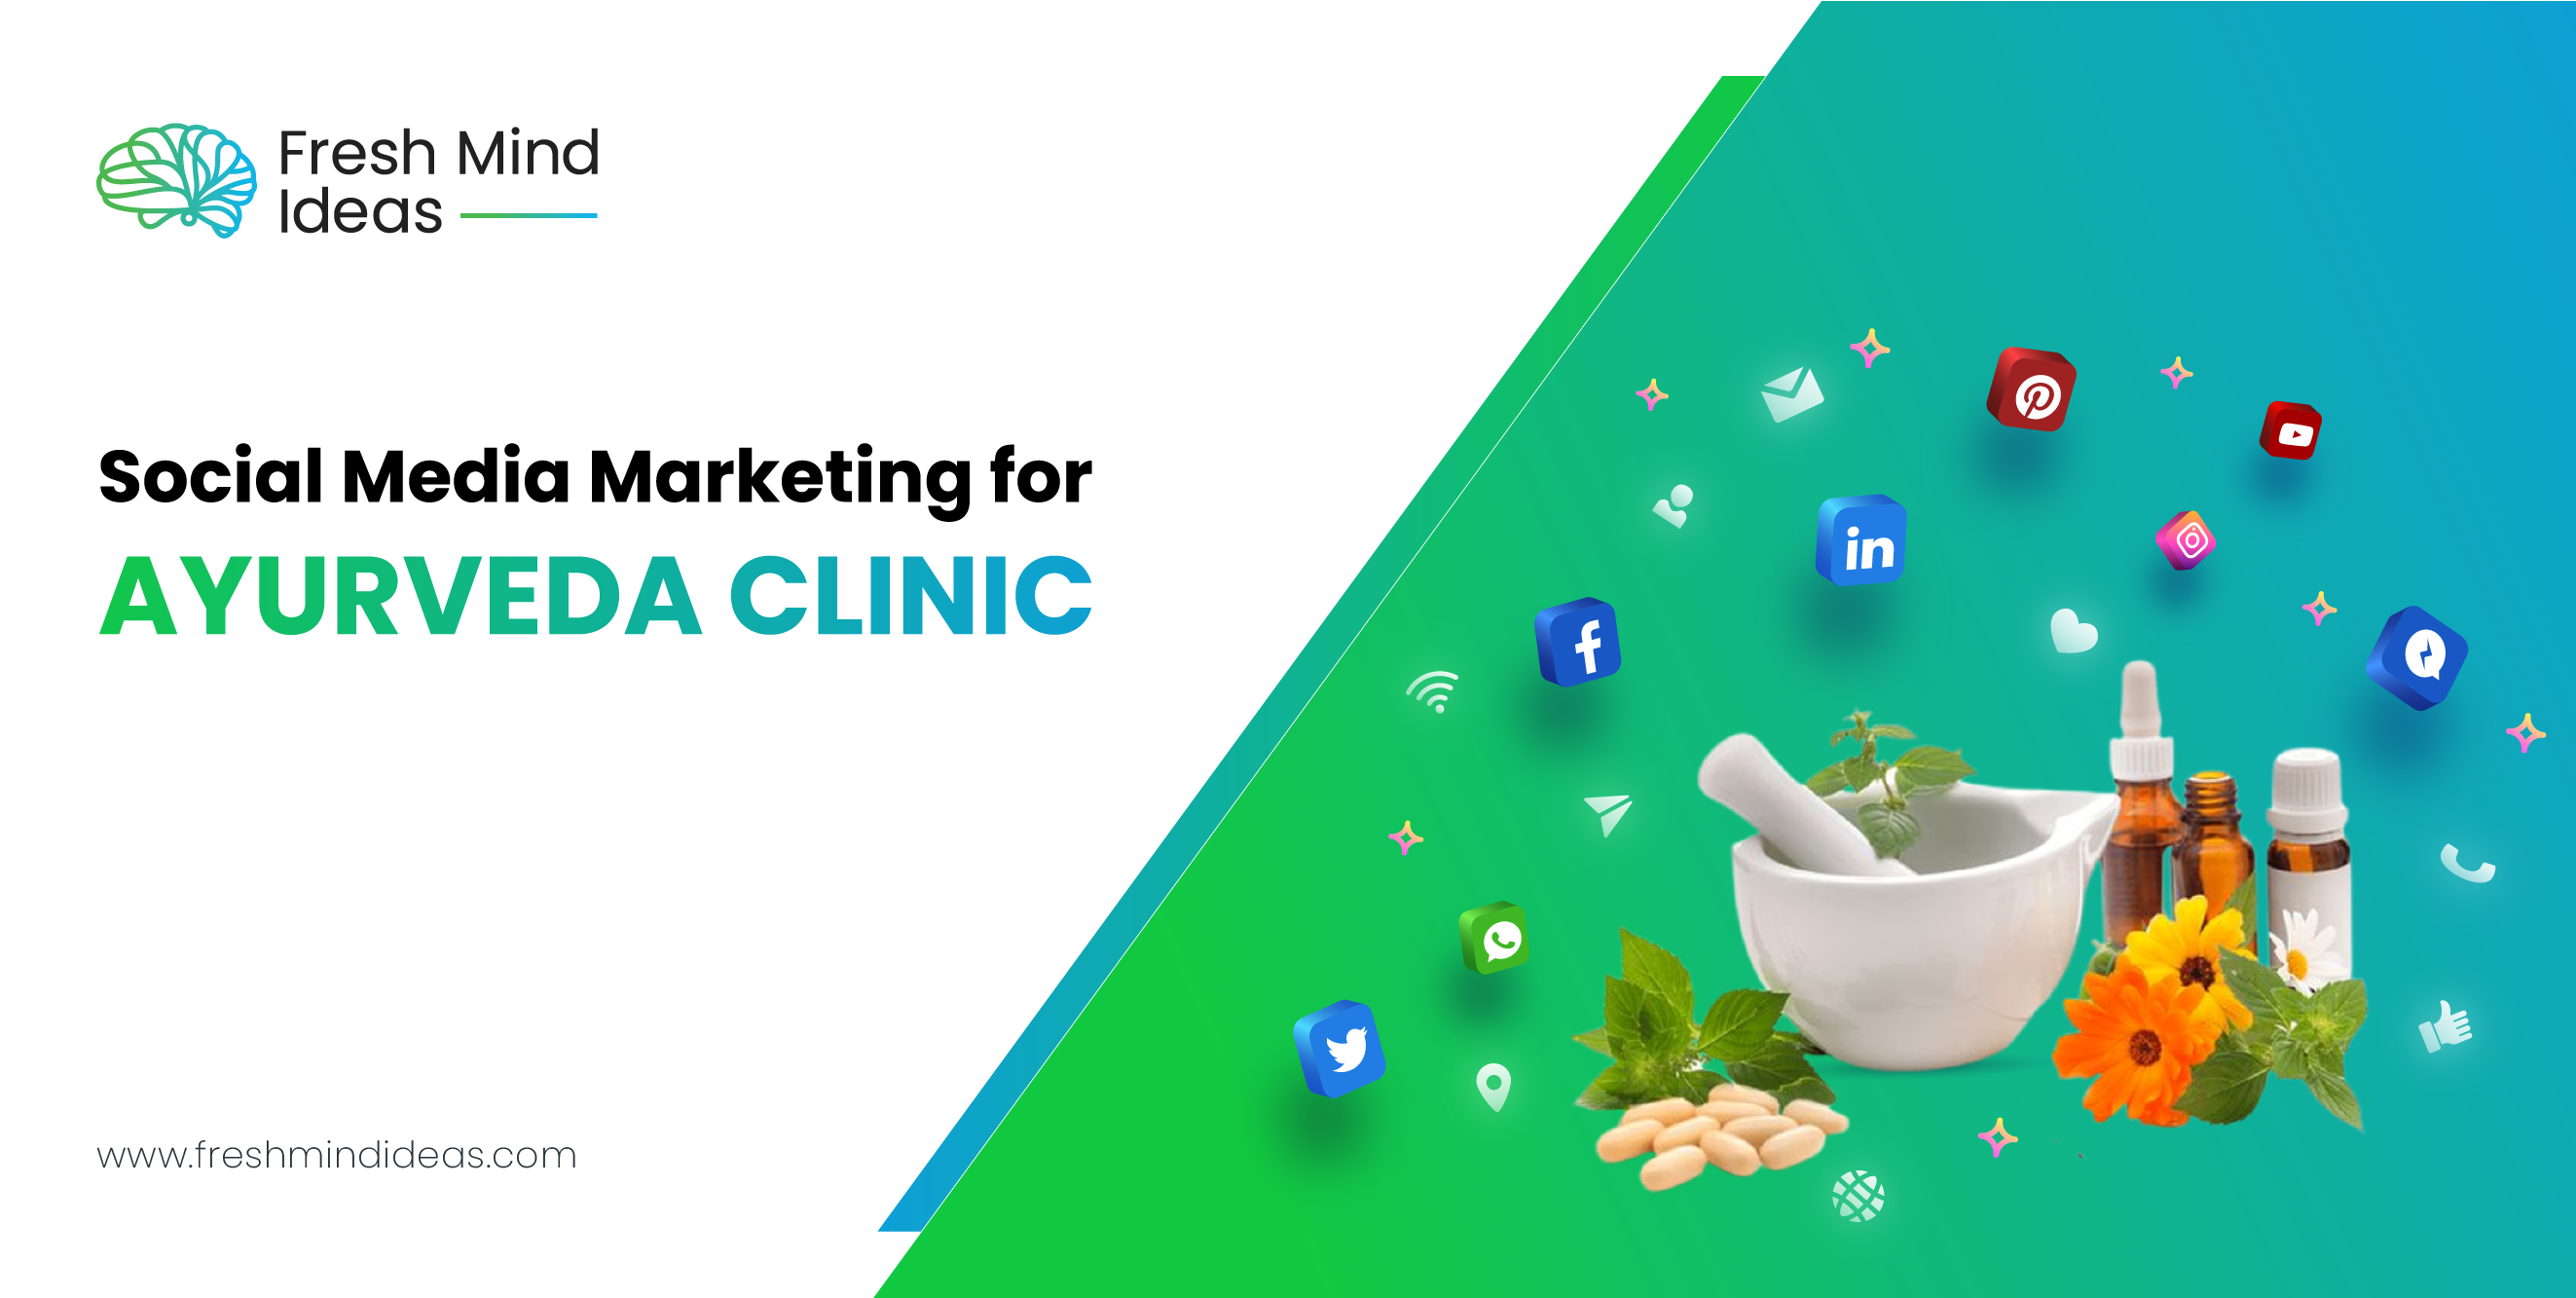 social media marketing for ayurvedic clinics